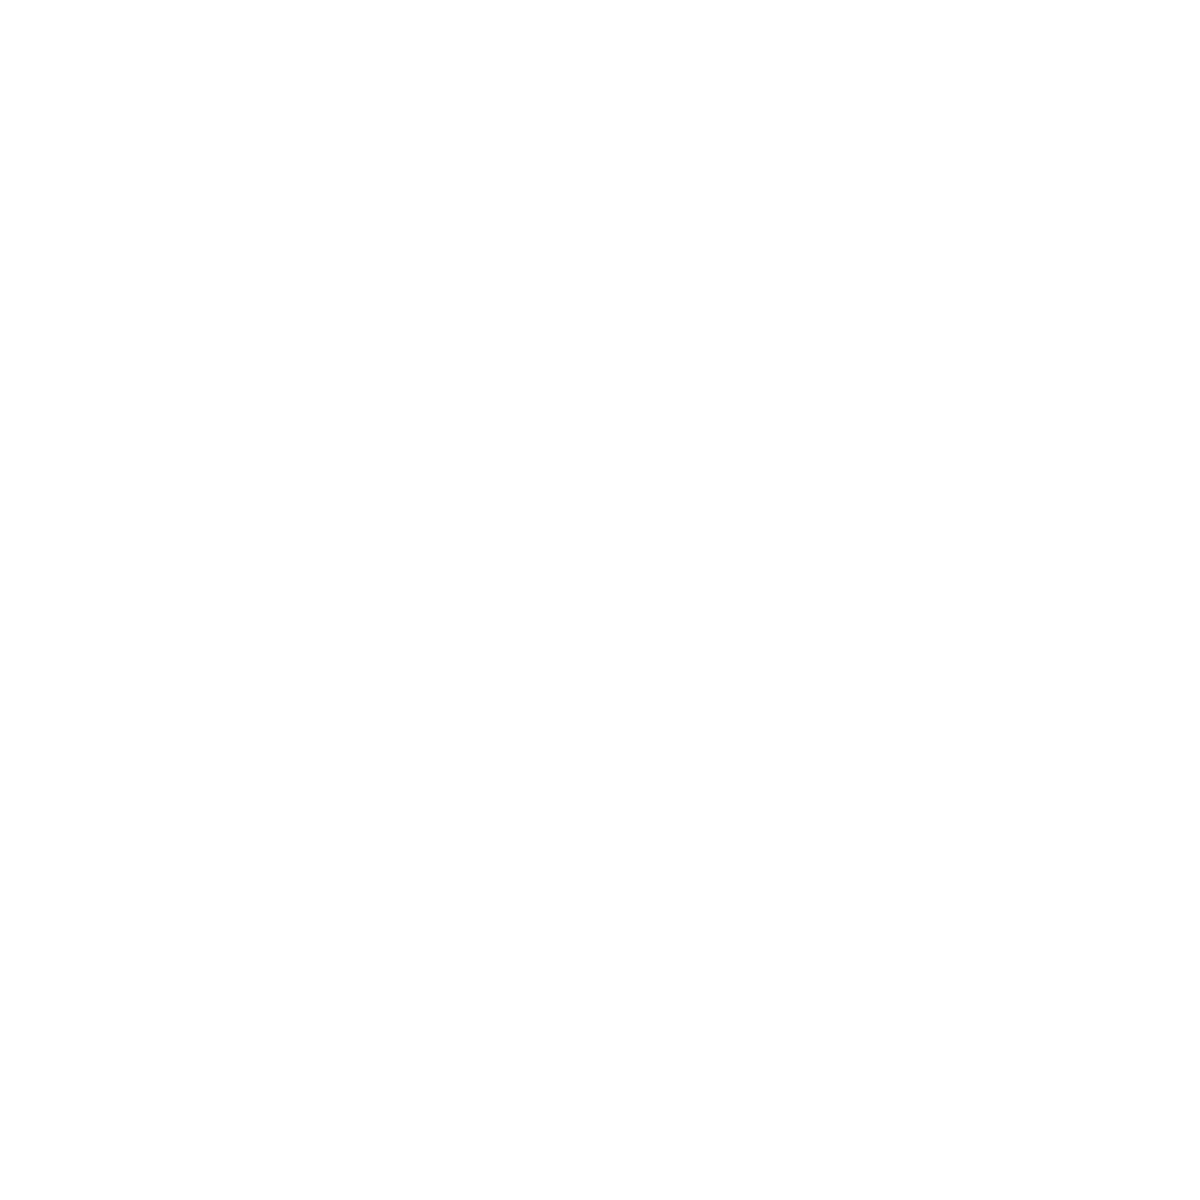 Amplify Her Voice Logo